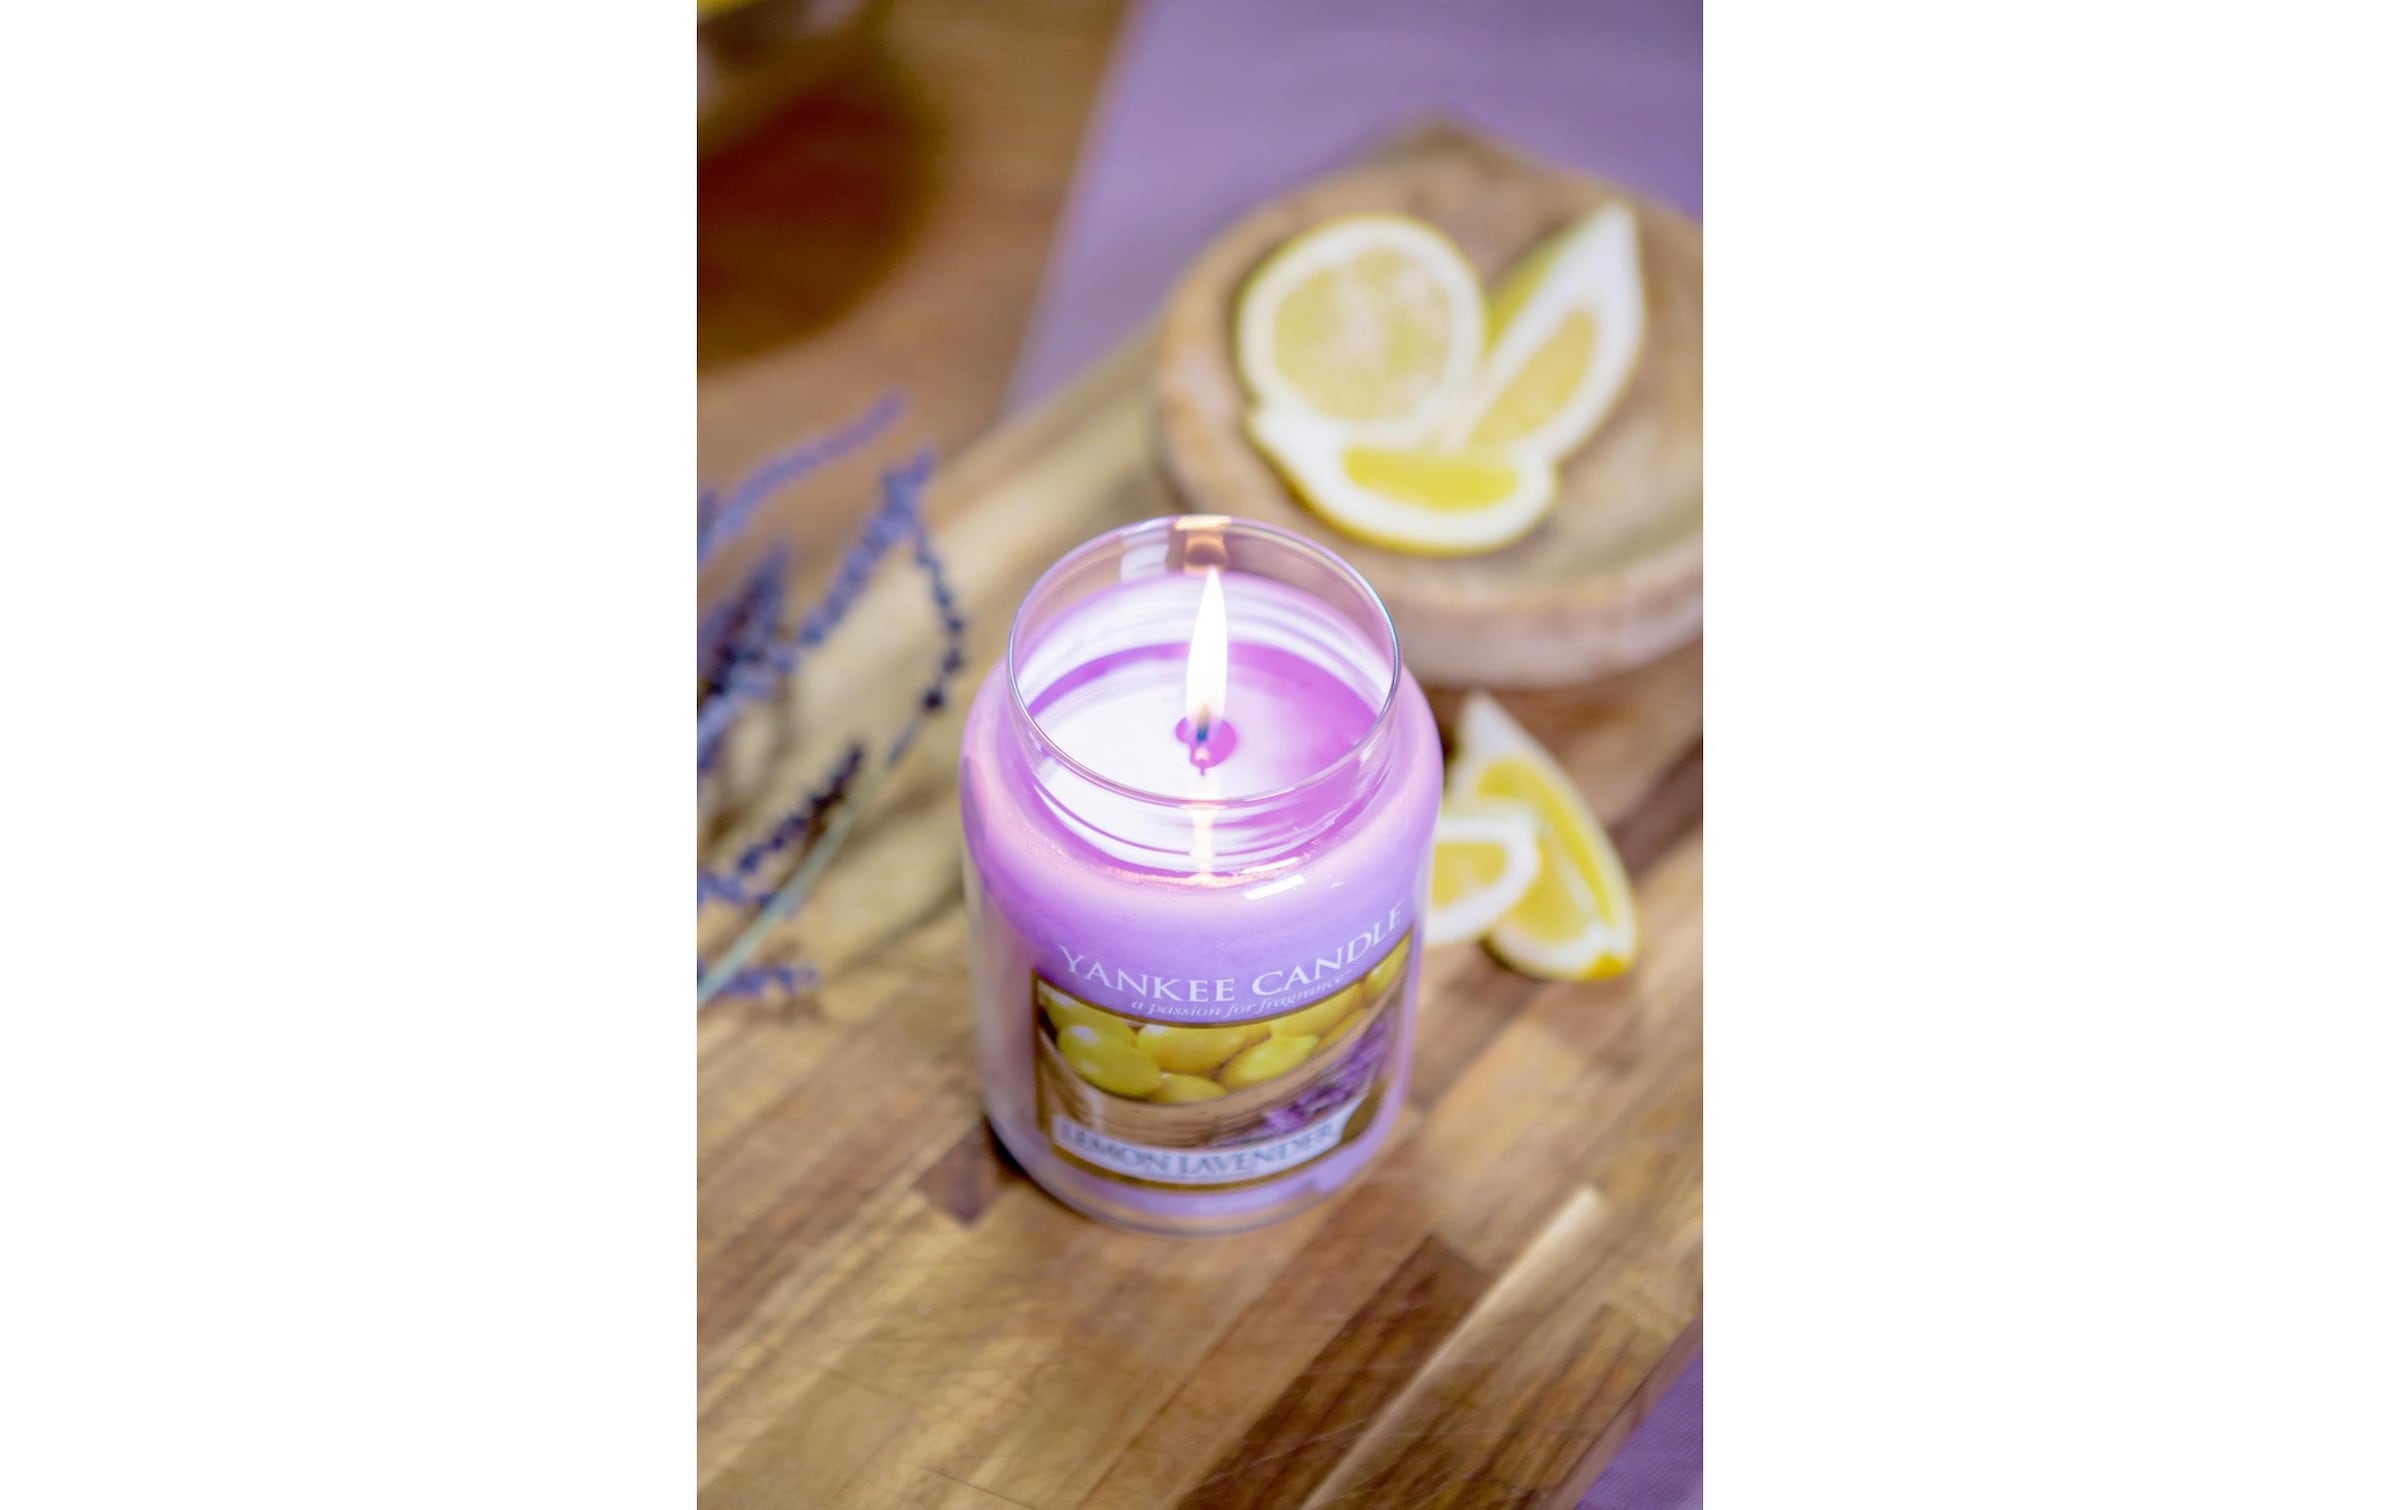 Yankee Candle Duftkerze »Lemon Lavender«